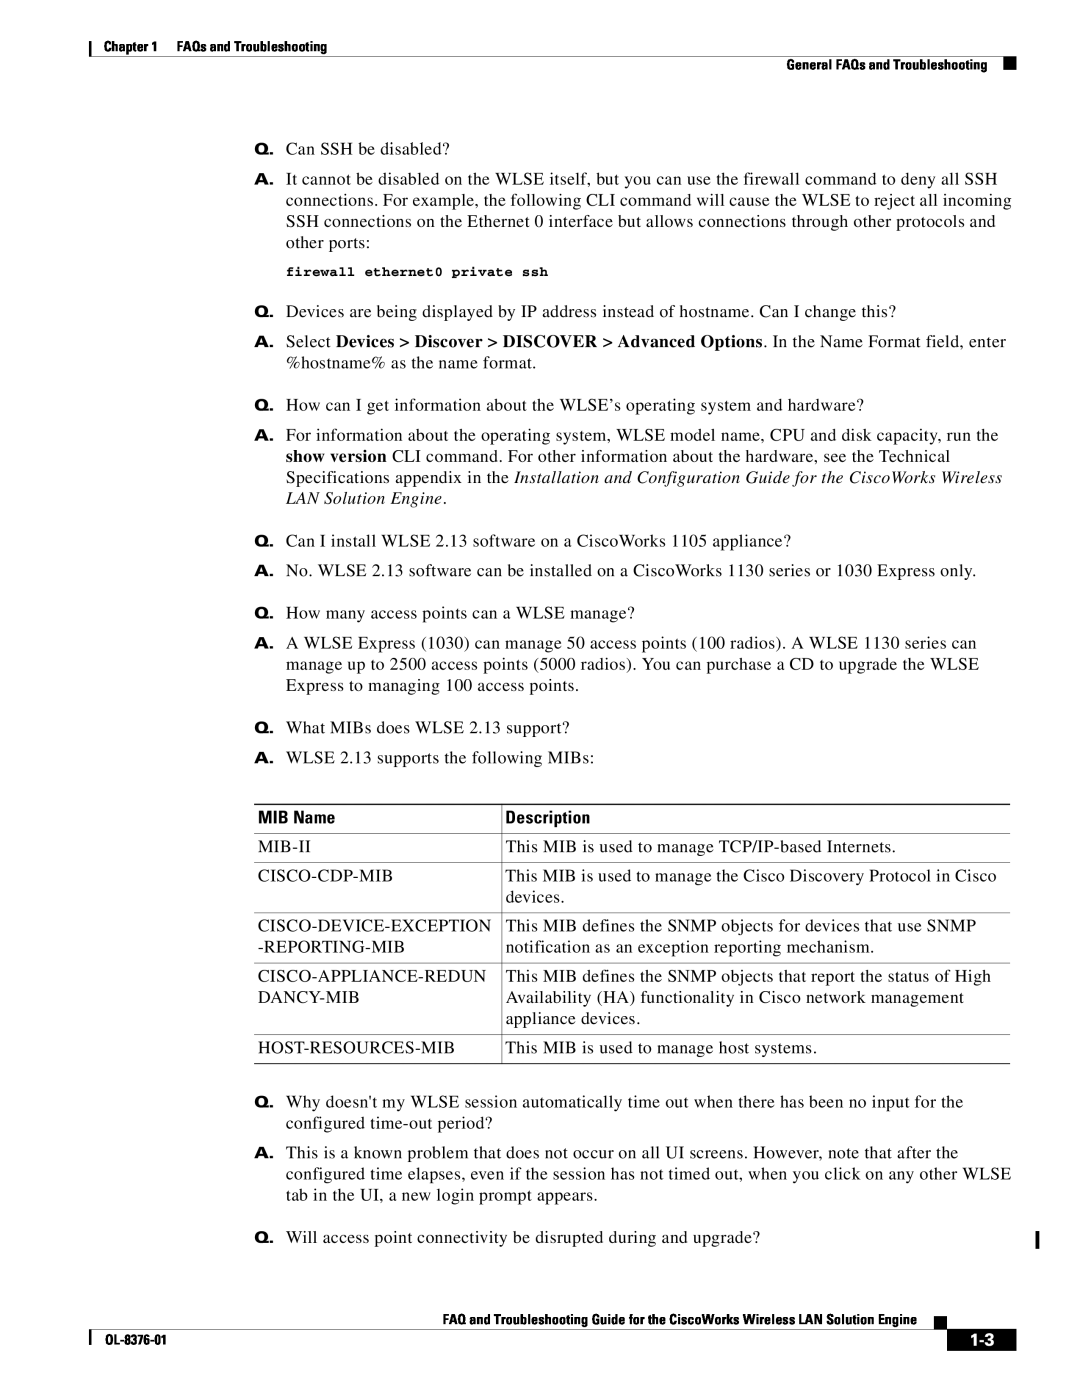 Cisco Systems OL-8376-01 manual MIB Name, Description 